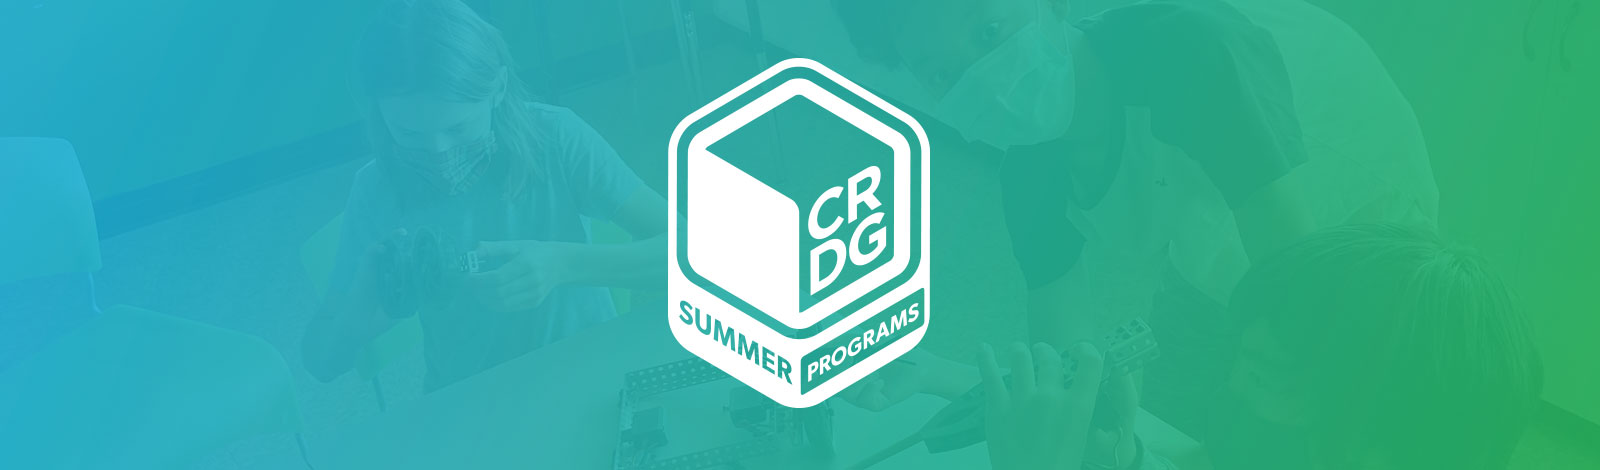 crdg summer programs logo graphic